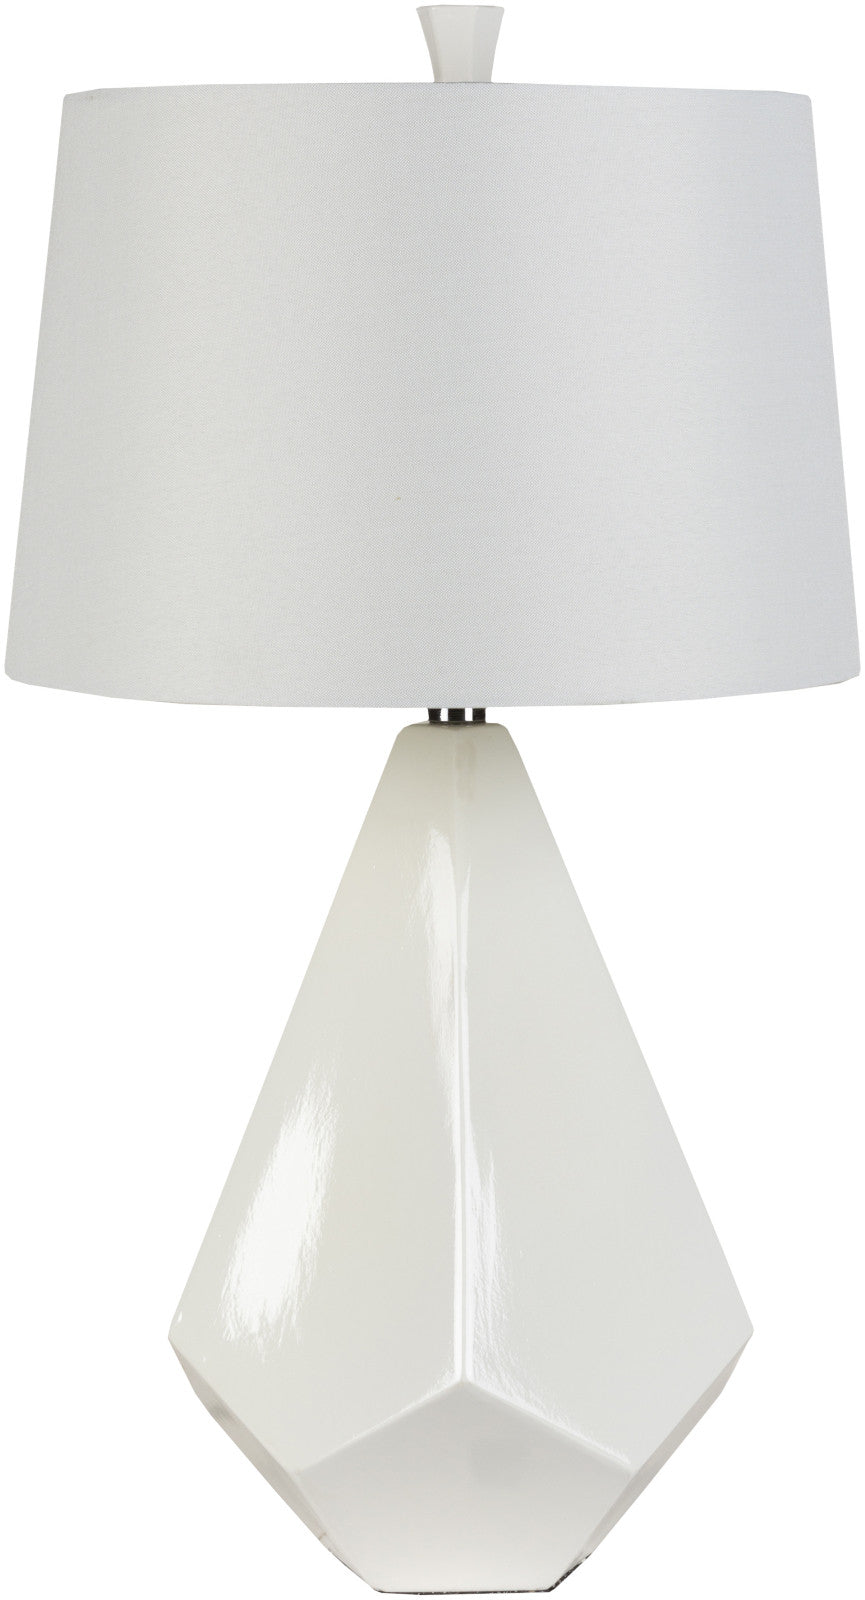 Surya Ceramic LMP-1016 White Lamp Table Lamp